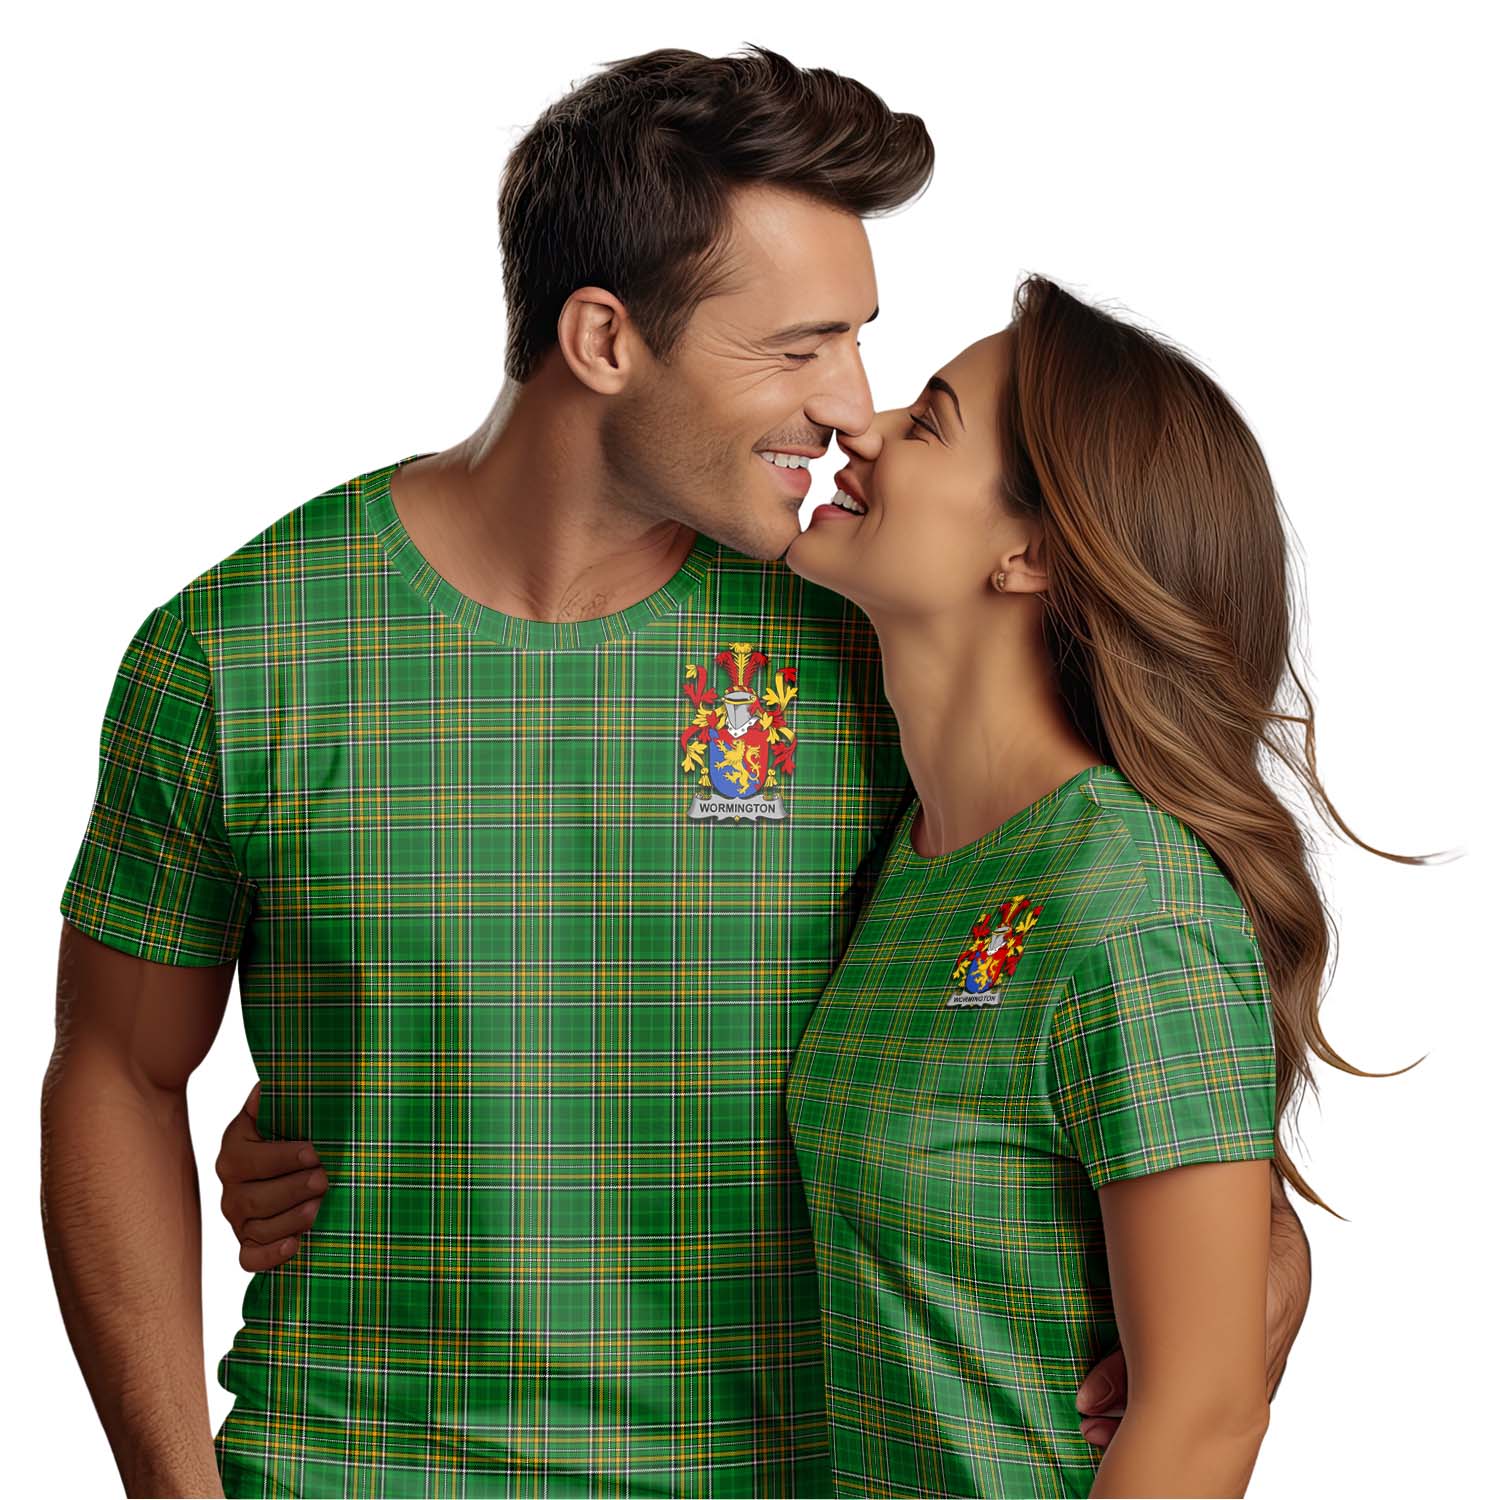 Tartan Vibes Clothing Wormington Ireland Clan Tartan T-Shirt with Family Seal